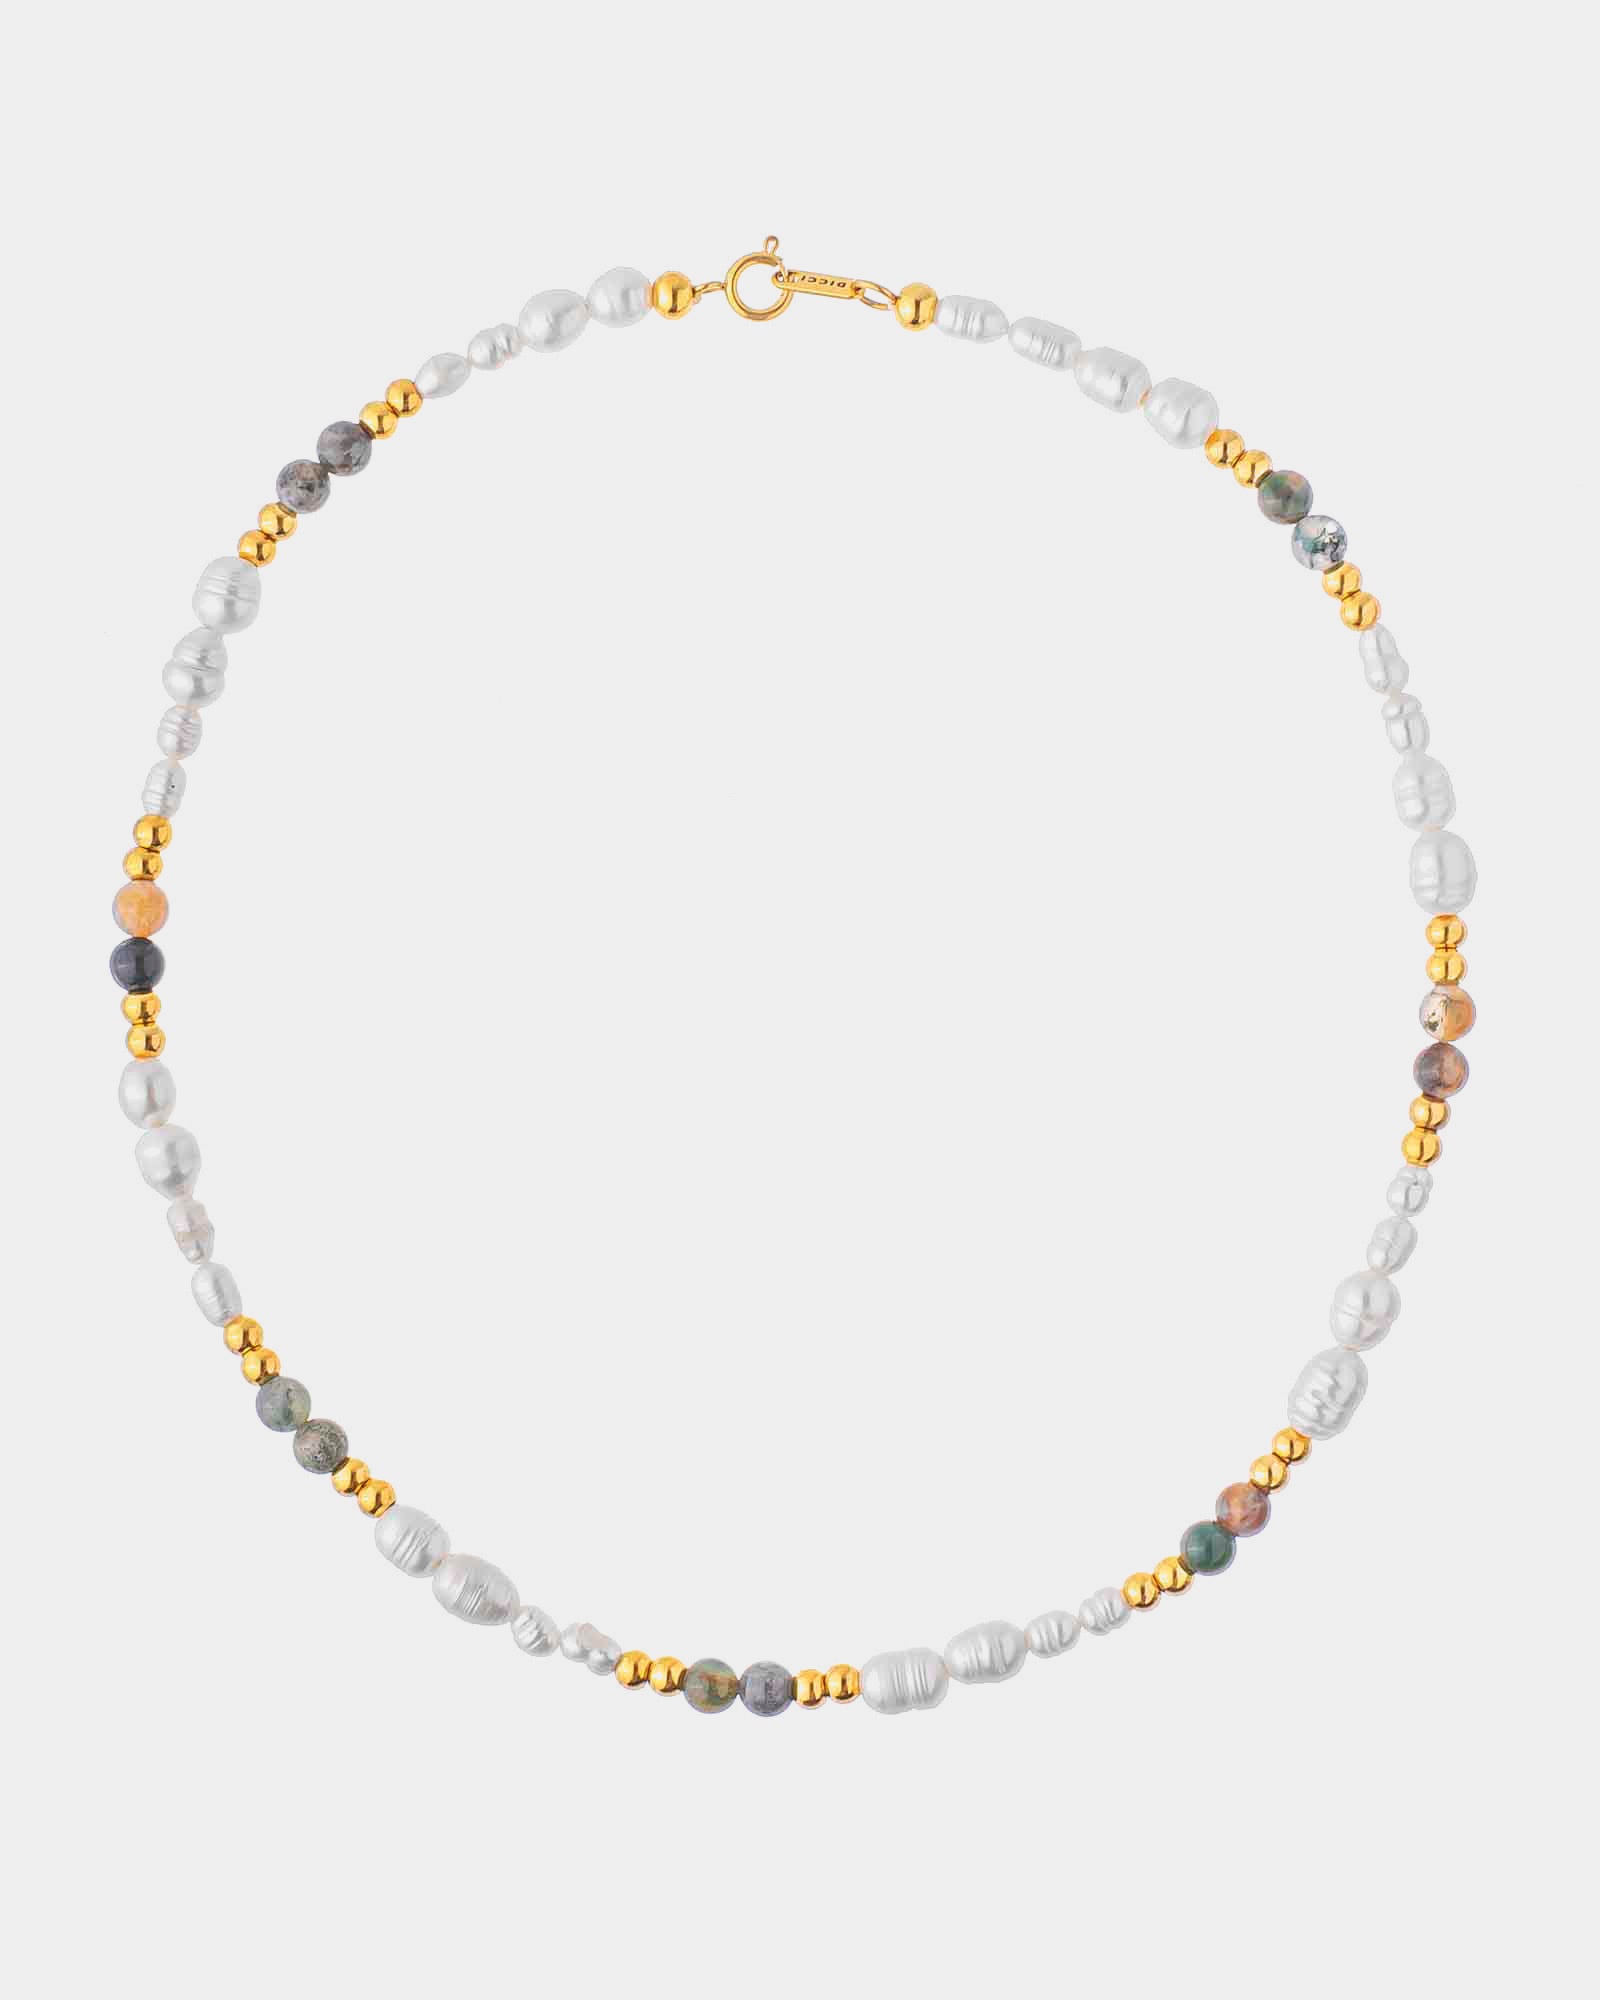 Menorca - Pearls and Stone Necklace 'Menorca' - Unisex Jewelry Online - Dicci